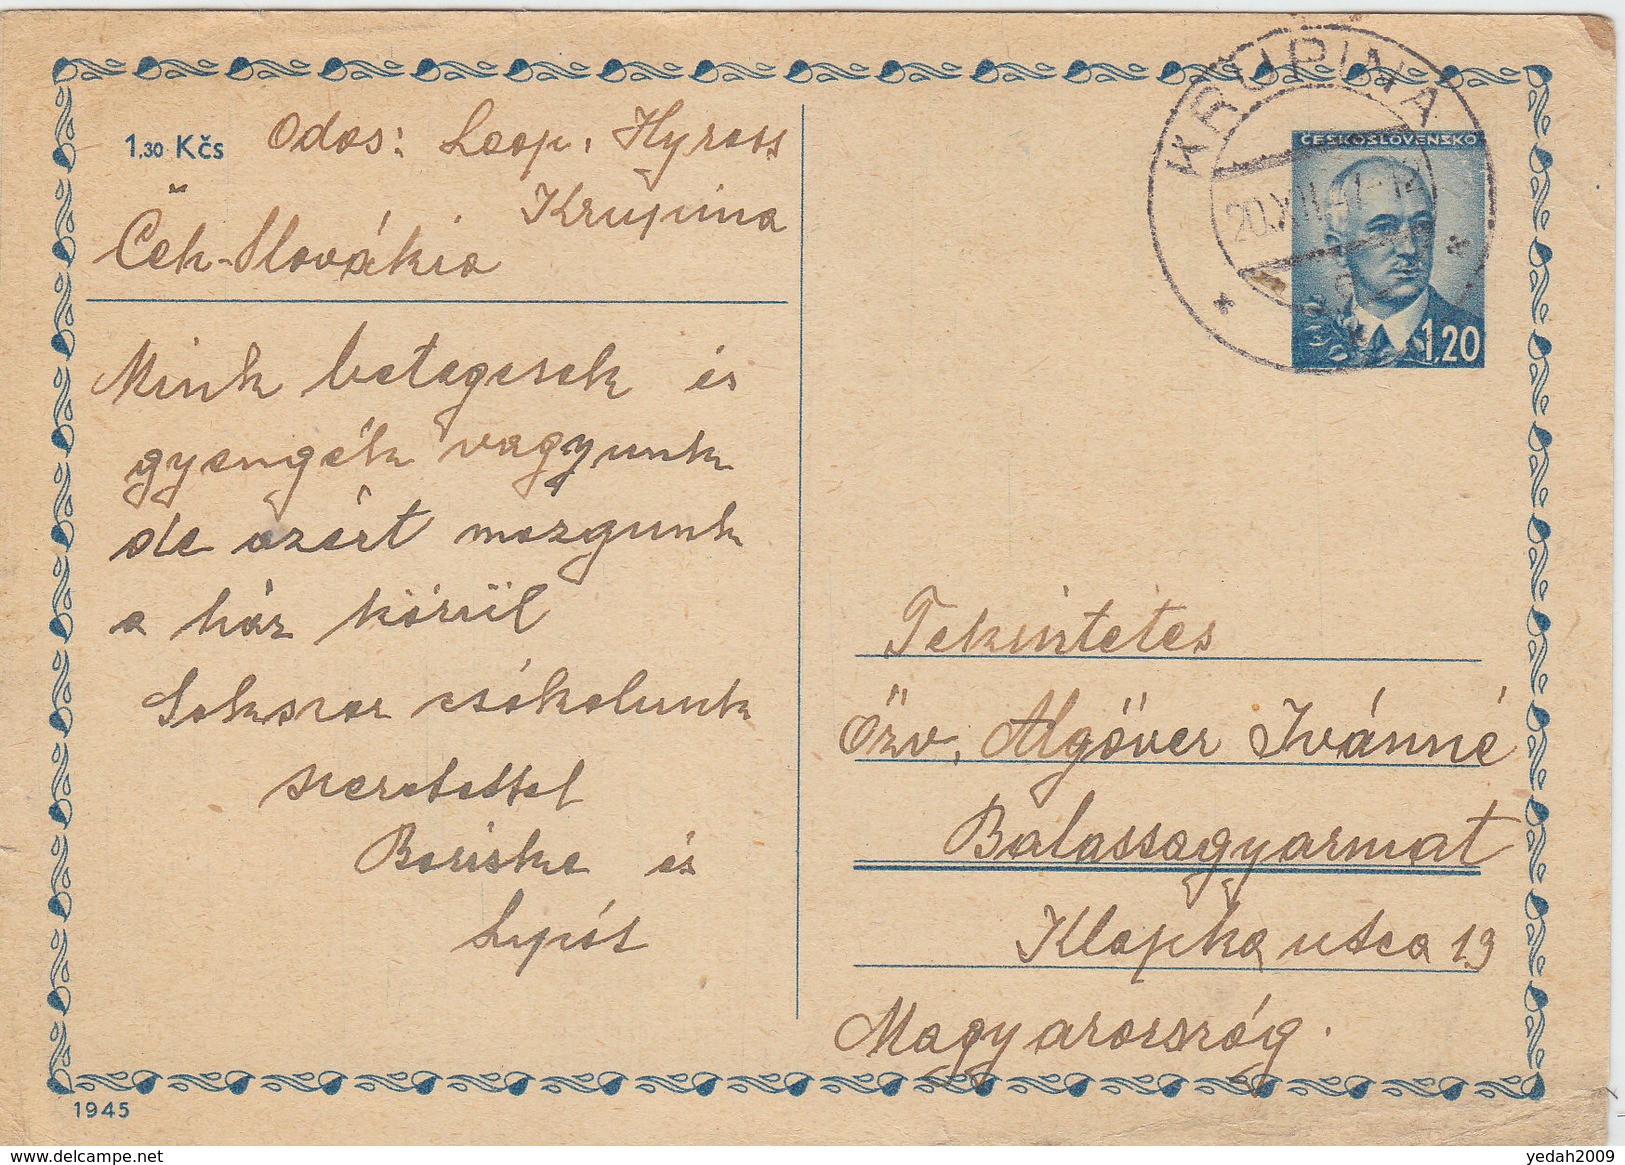 CZEHOSLOVAKIA POSTAL CARDS 1947 - Sobres